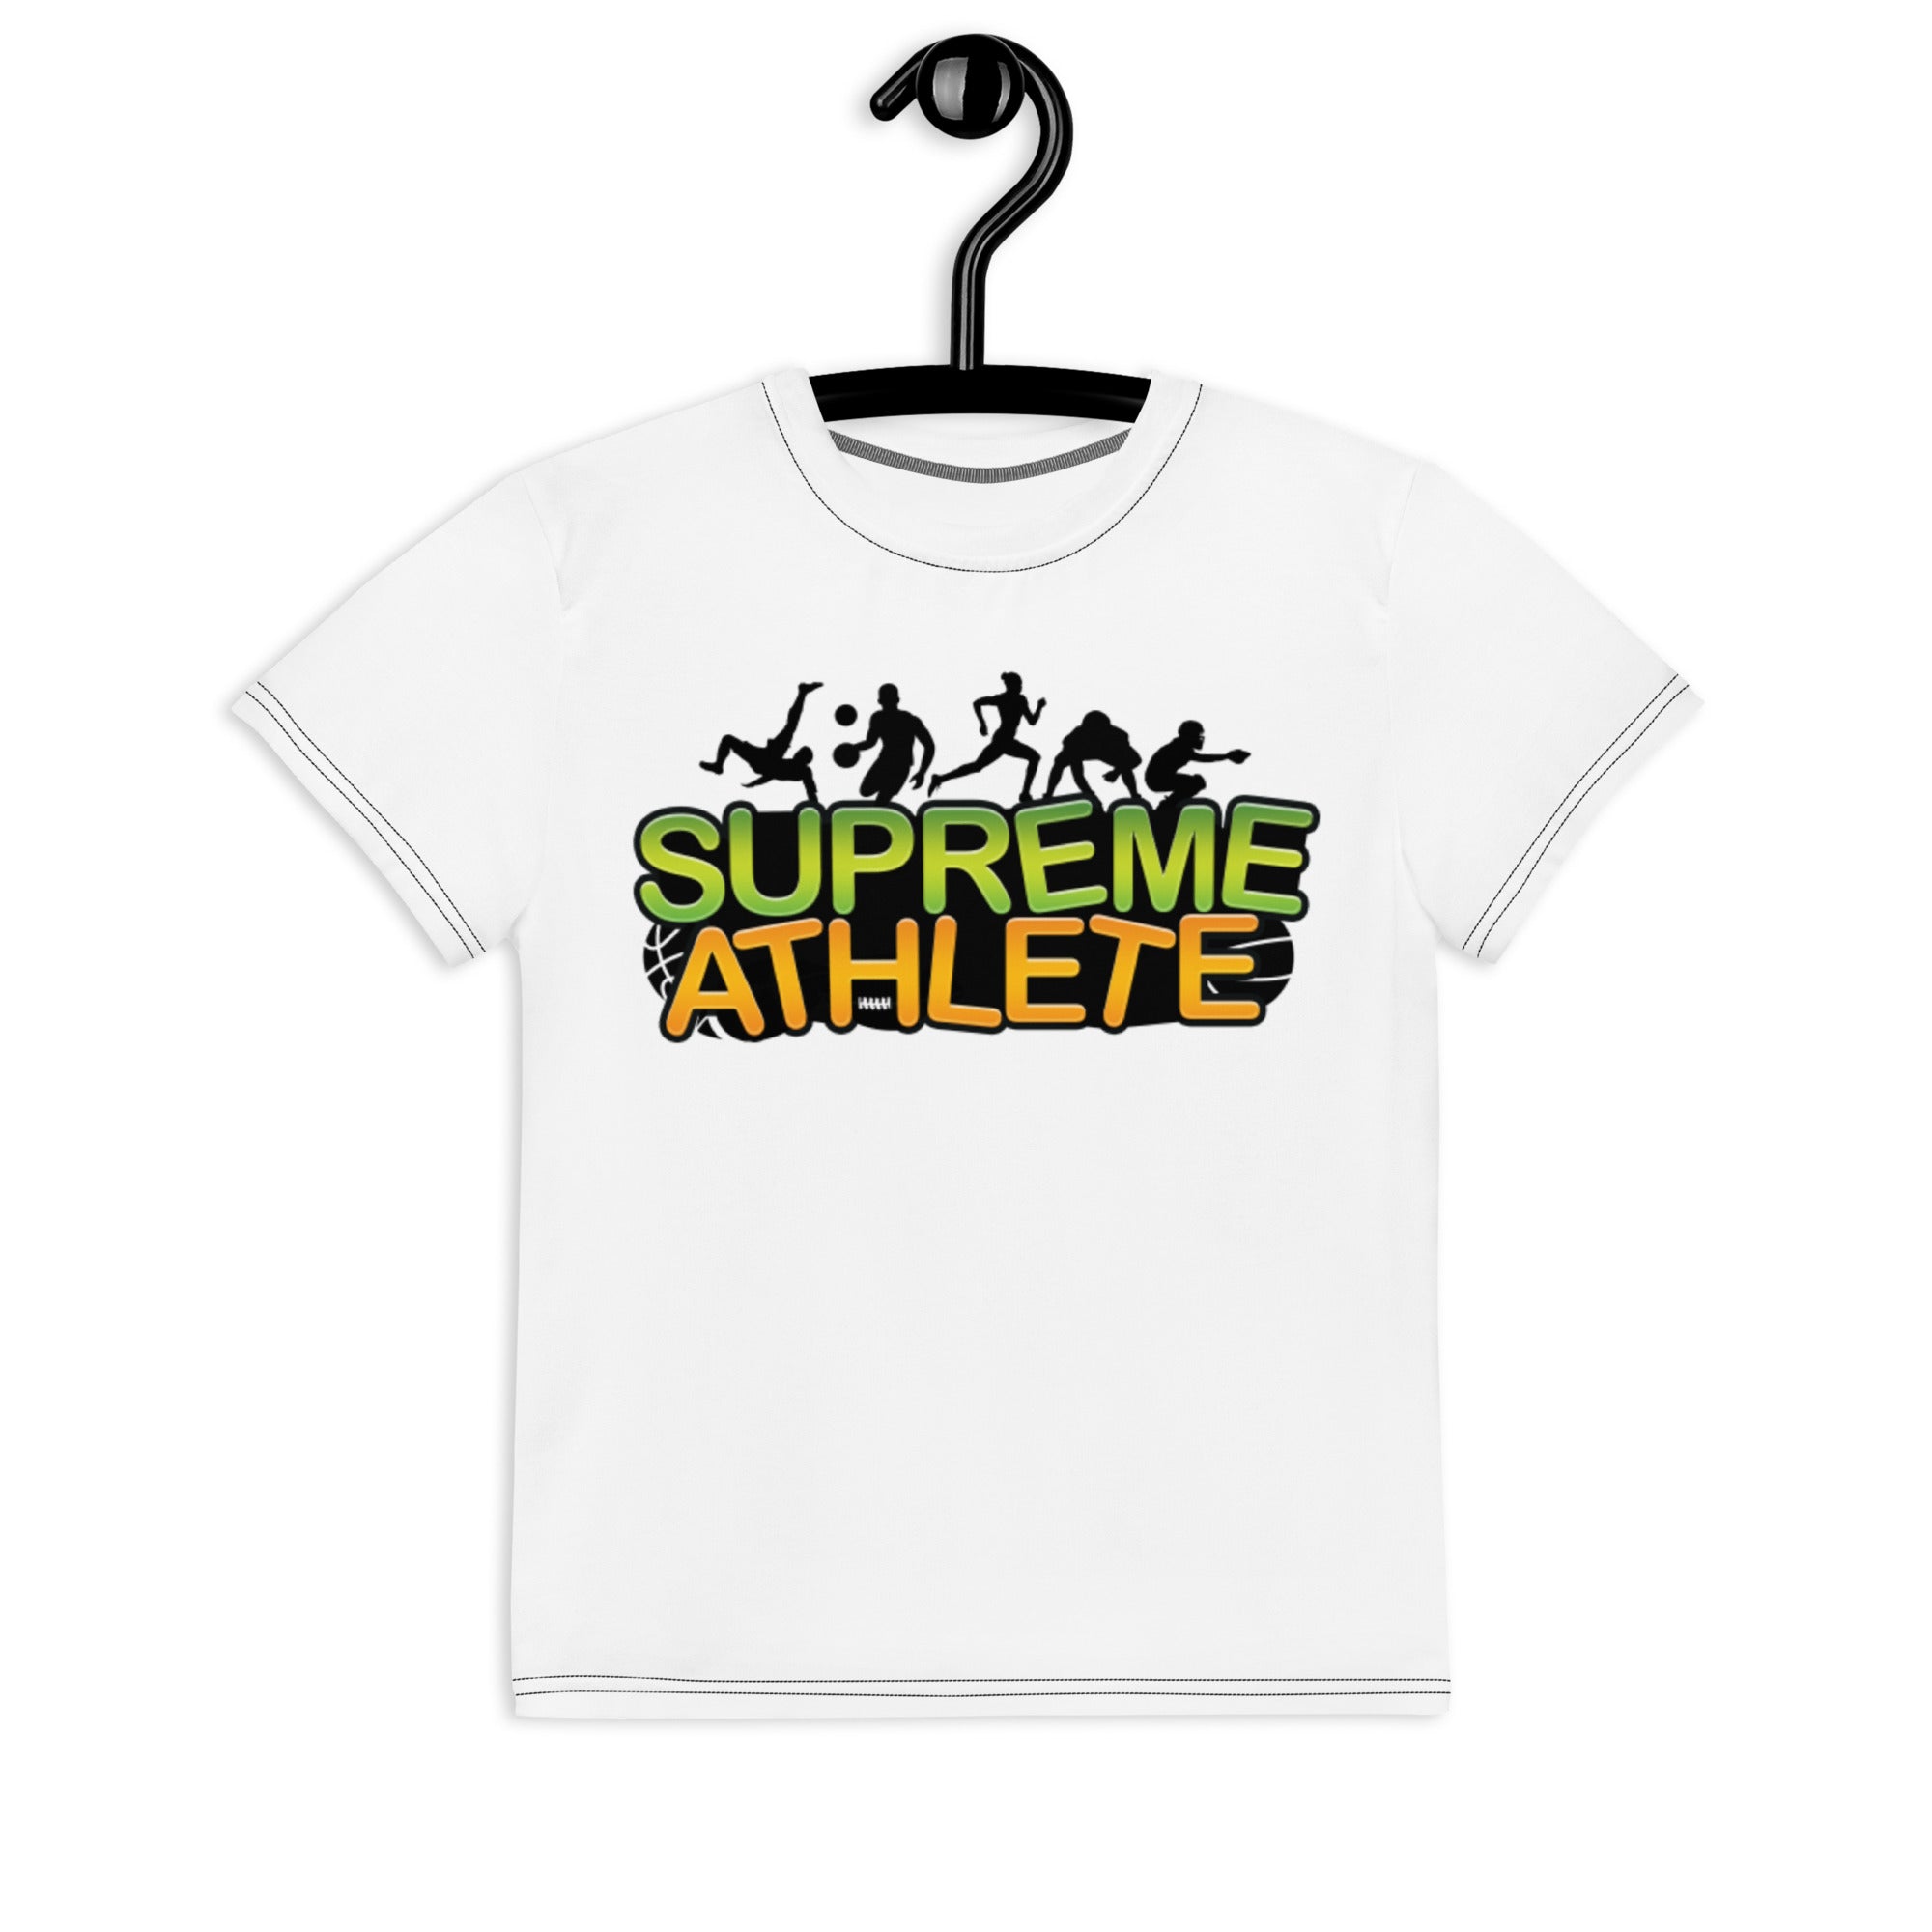 "Supreme Versatility" Youth crew neck t-shirt Supreme Athlete 8 